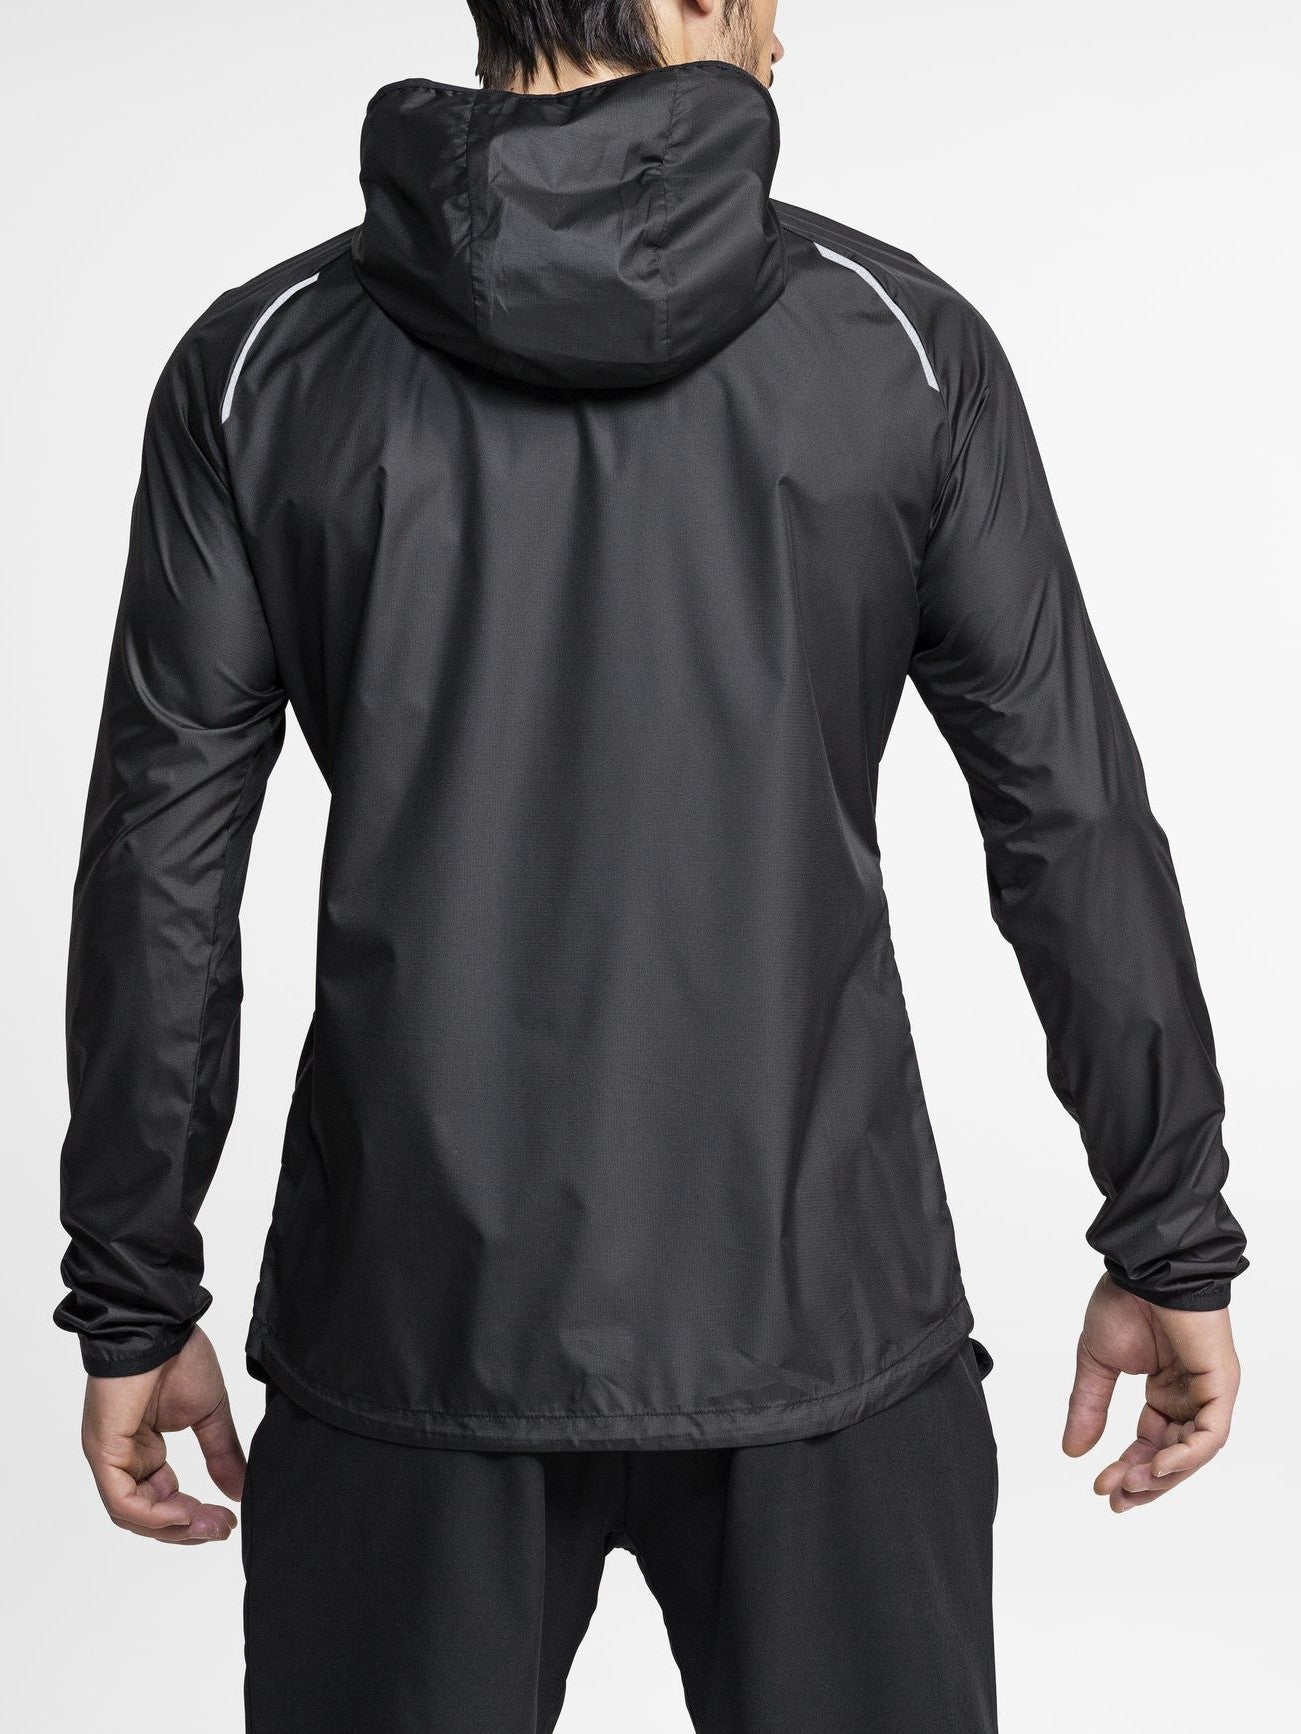 BJORN BORG Aimo Hooded Wind Jacket Men's Performance Zipped Long Sleeve Top Black - Activemen Clothing